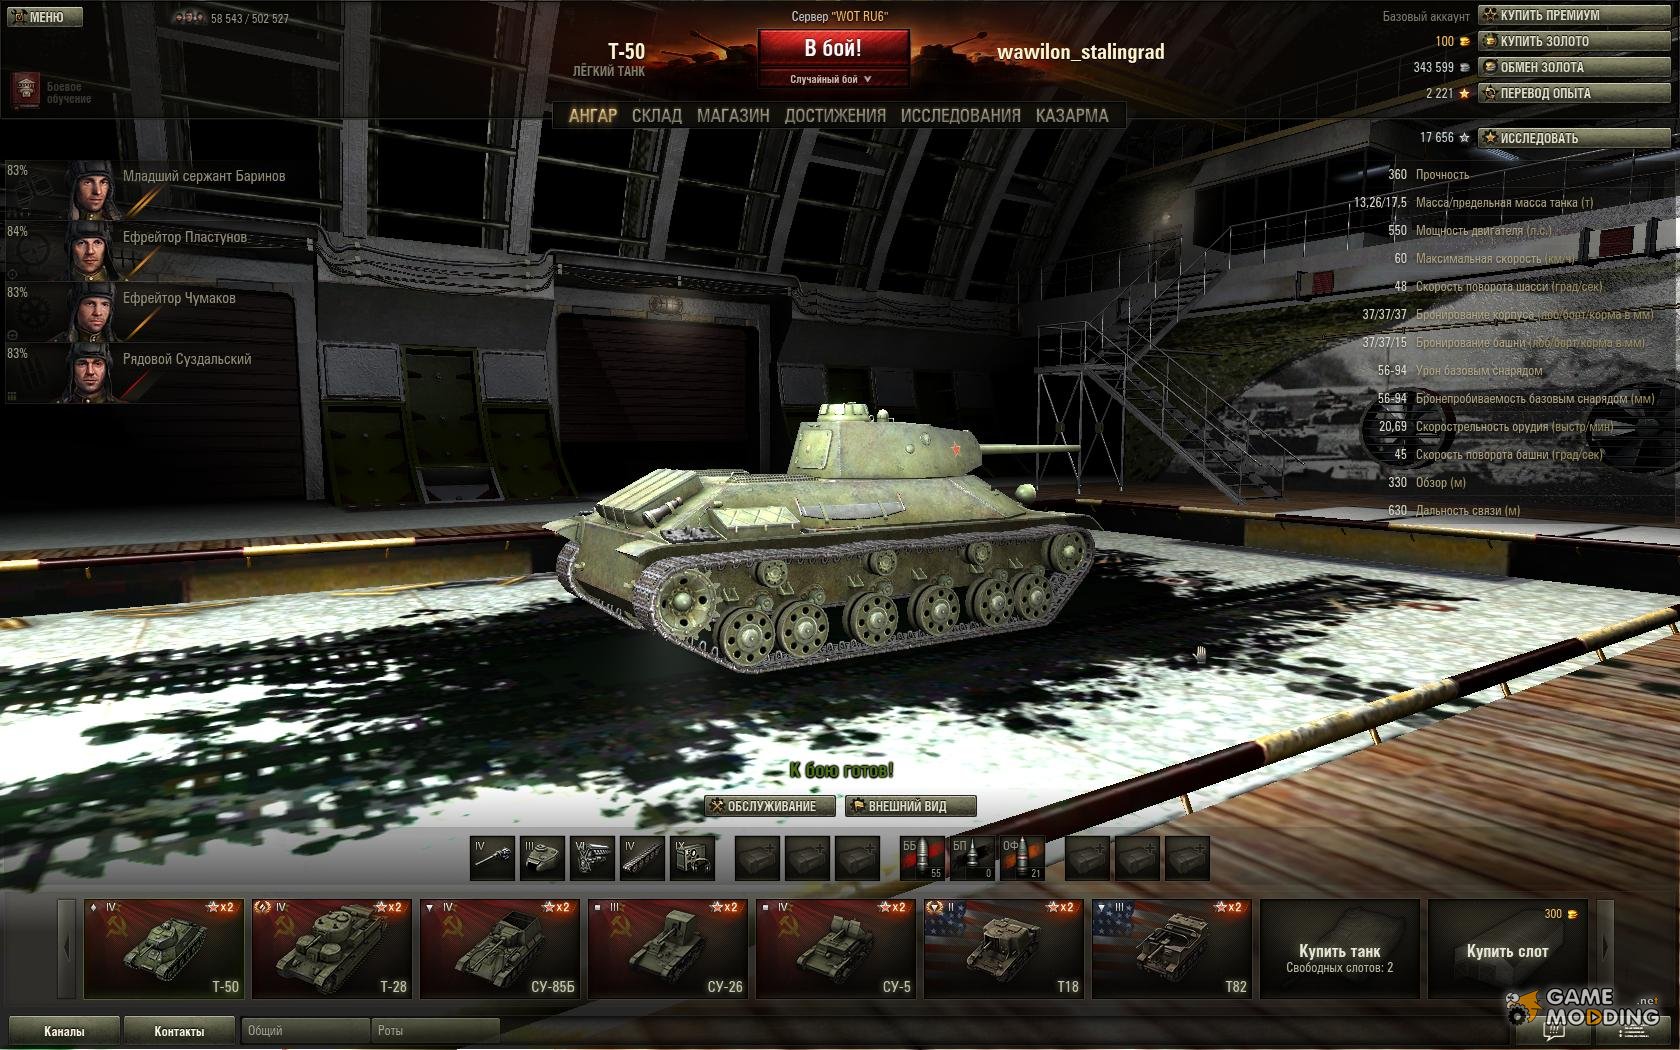 Покажи какие танки. Танк dw2 в World of Tanks. Ворлд оф танк 3 уровень танки. Коллекционная техника в ворлд оф танк. Танки 8 уровня в World of Tanks Blitz.